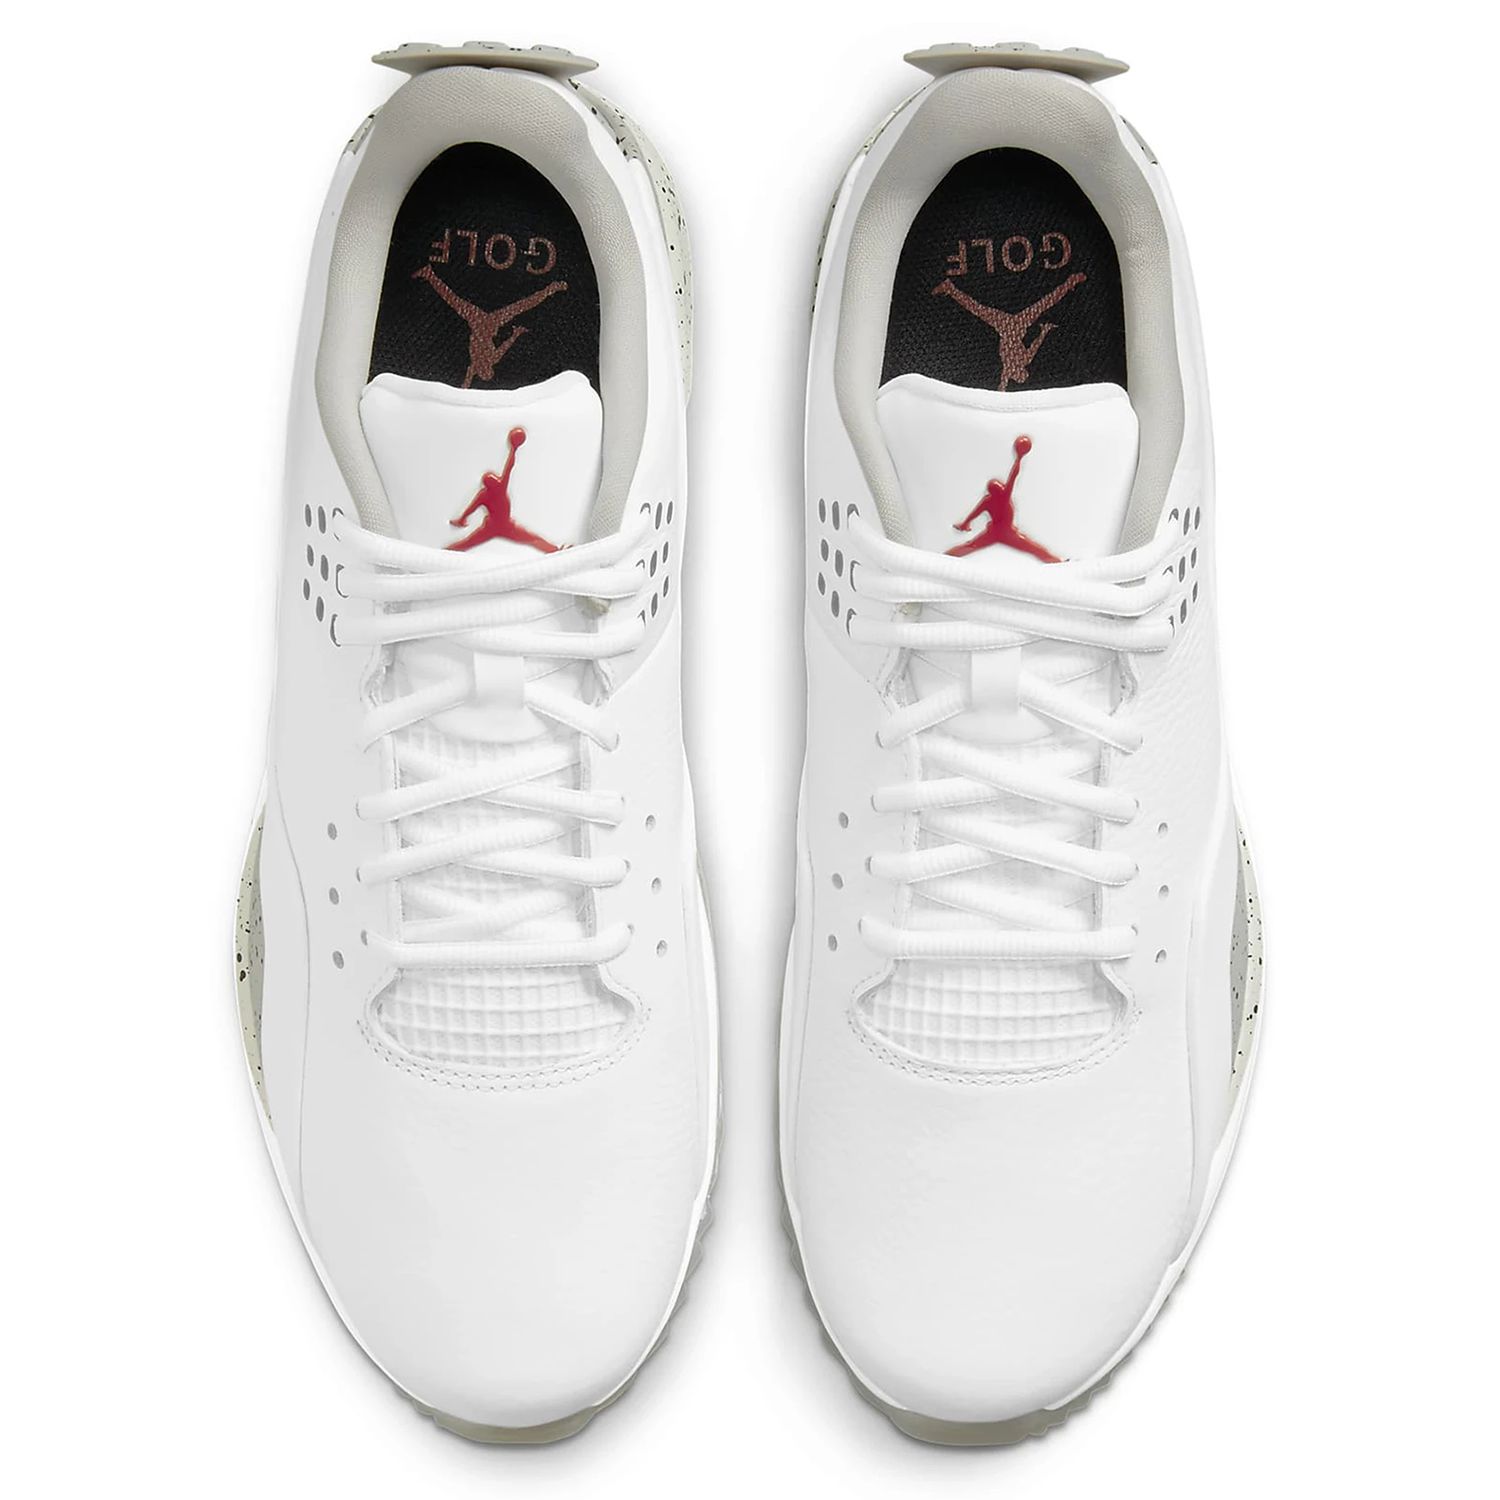 Nike Air Jordan ADG 3 Golf Shoes White/Tech Grey/Black/Fire ...